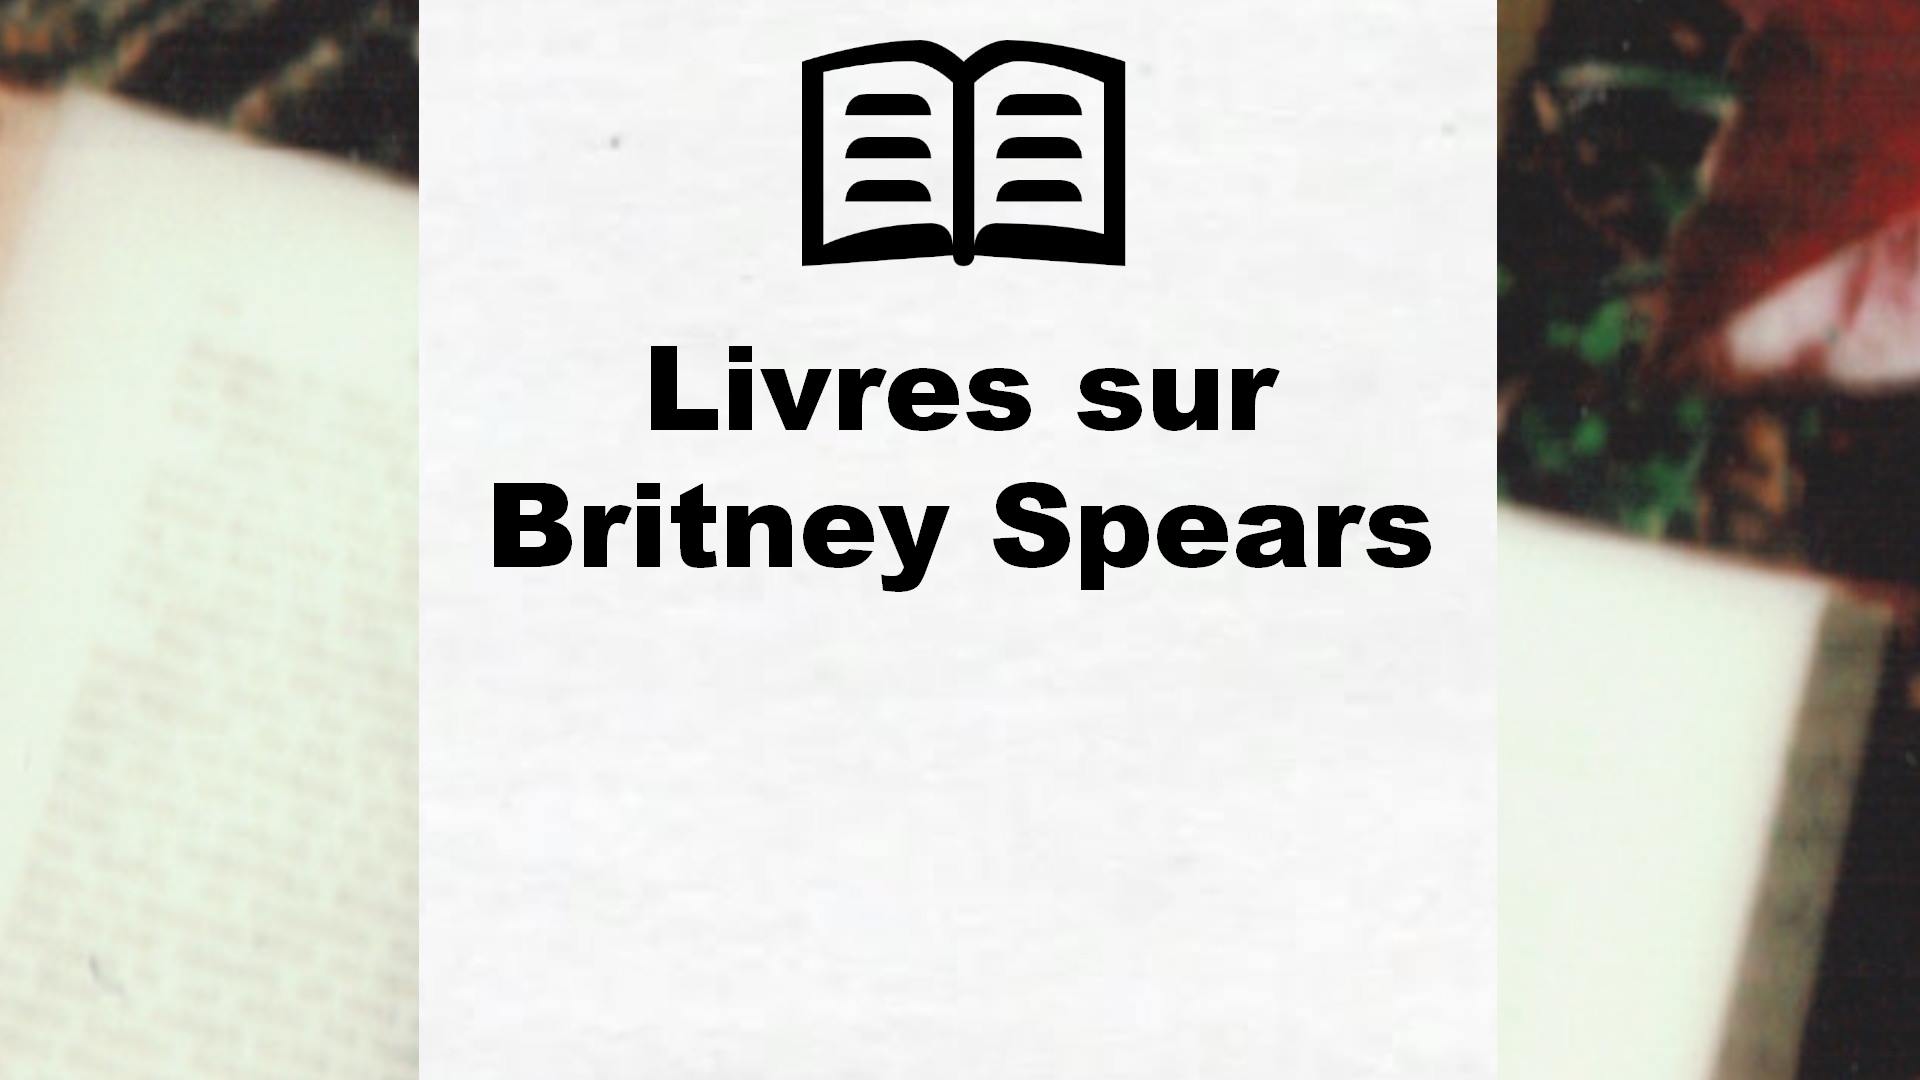 Livres sur Britney Spears